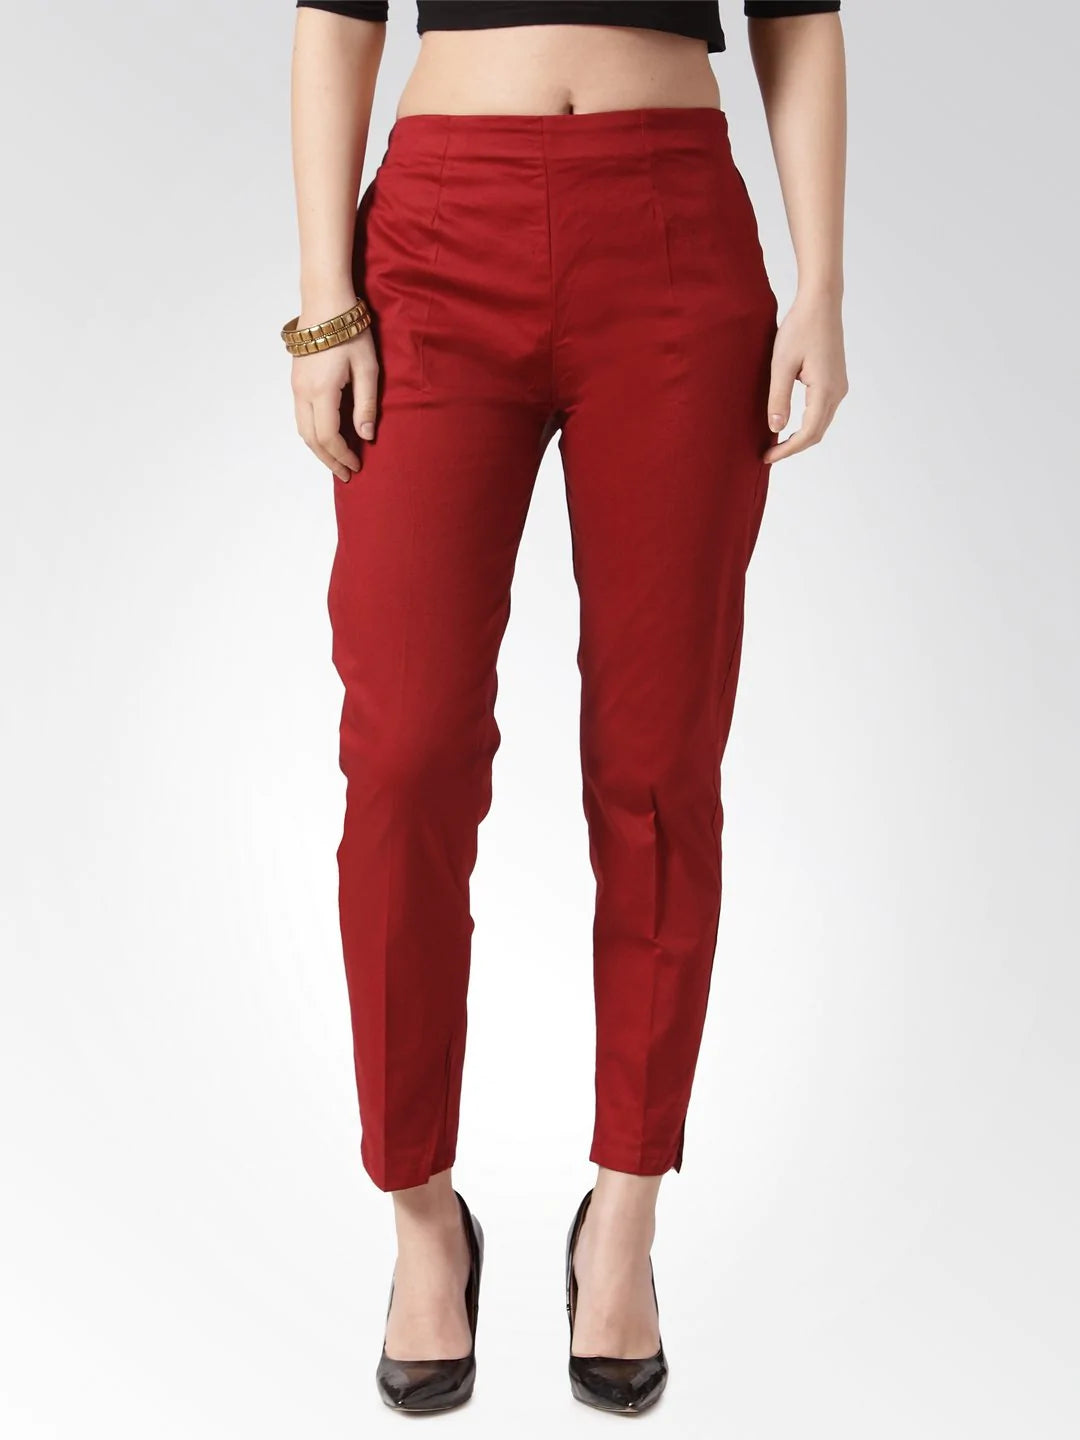 Jompers Women Maroon Smart Slim Fit Solid Regular Trousers ( JOP 2119 Maroon )